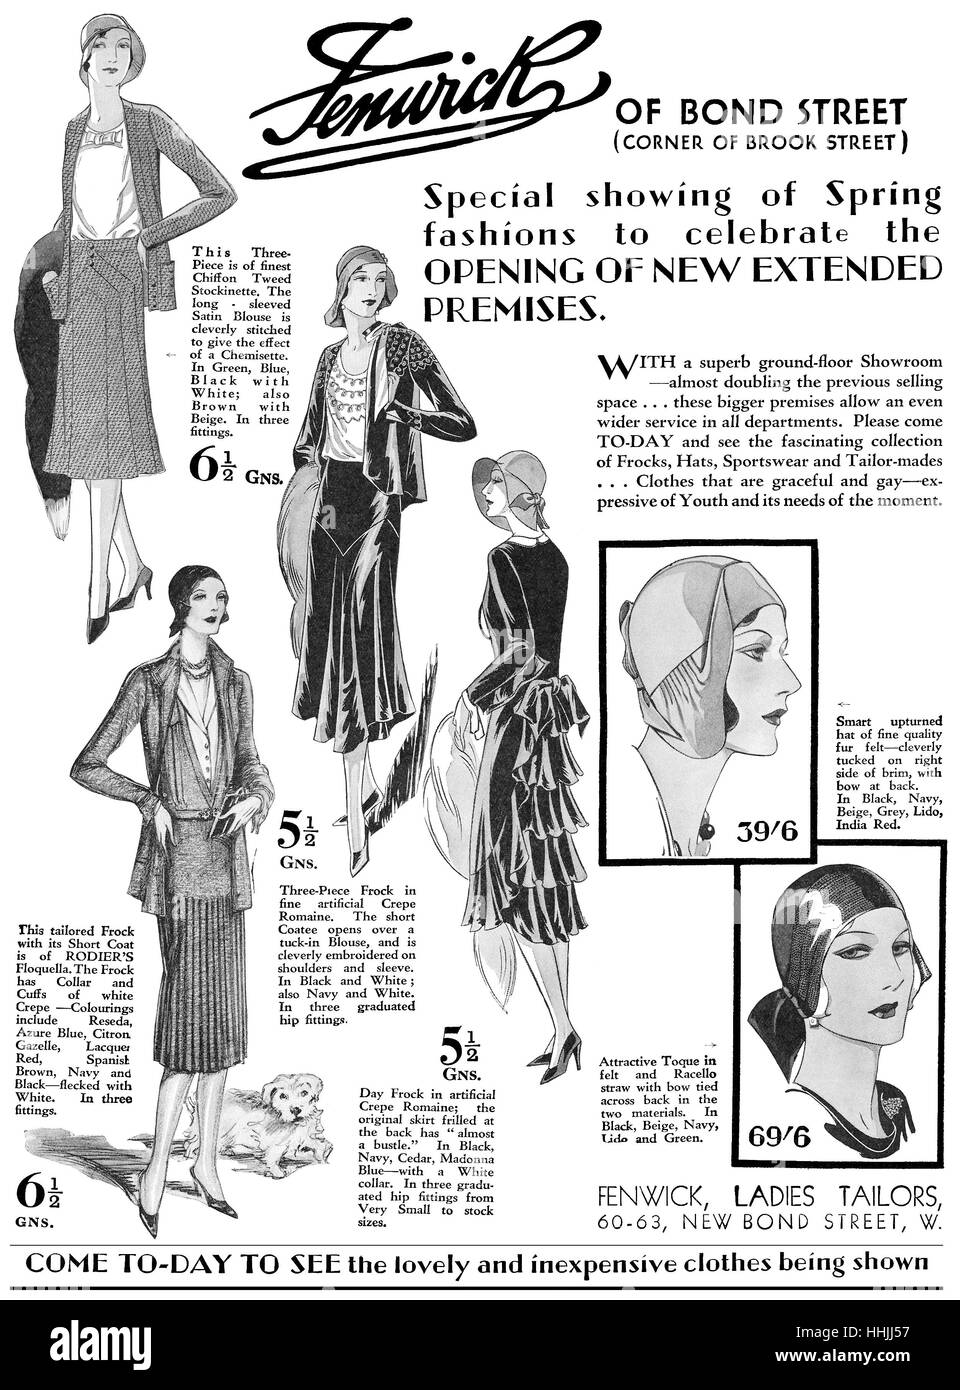 1930 British advertisement for the Fenwick department store in Bond Street, London Stock Photo